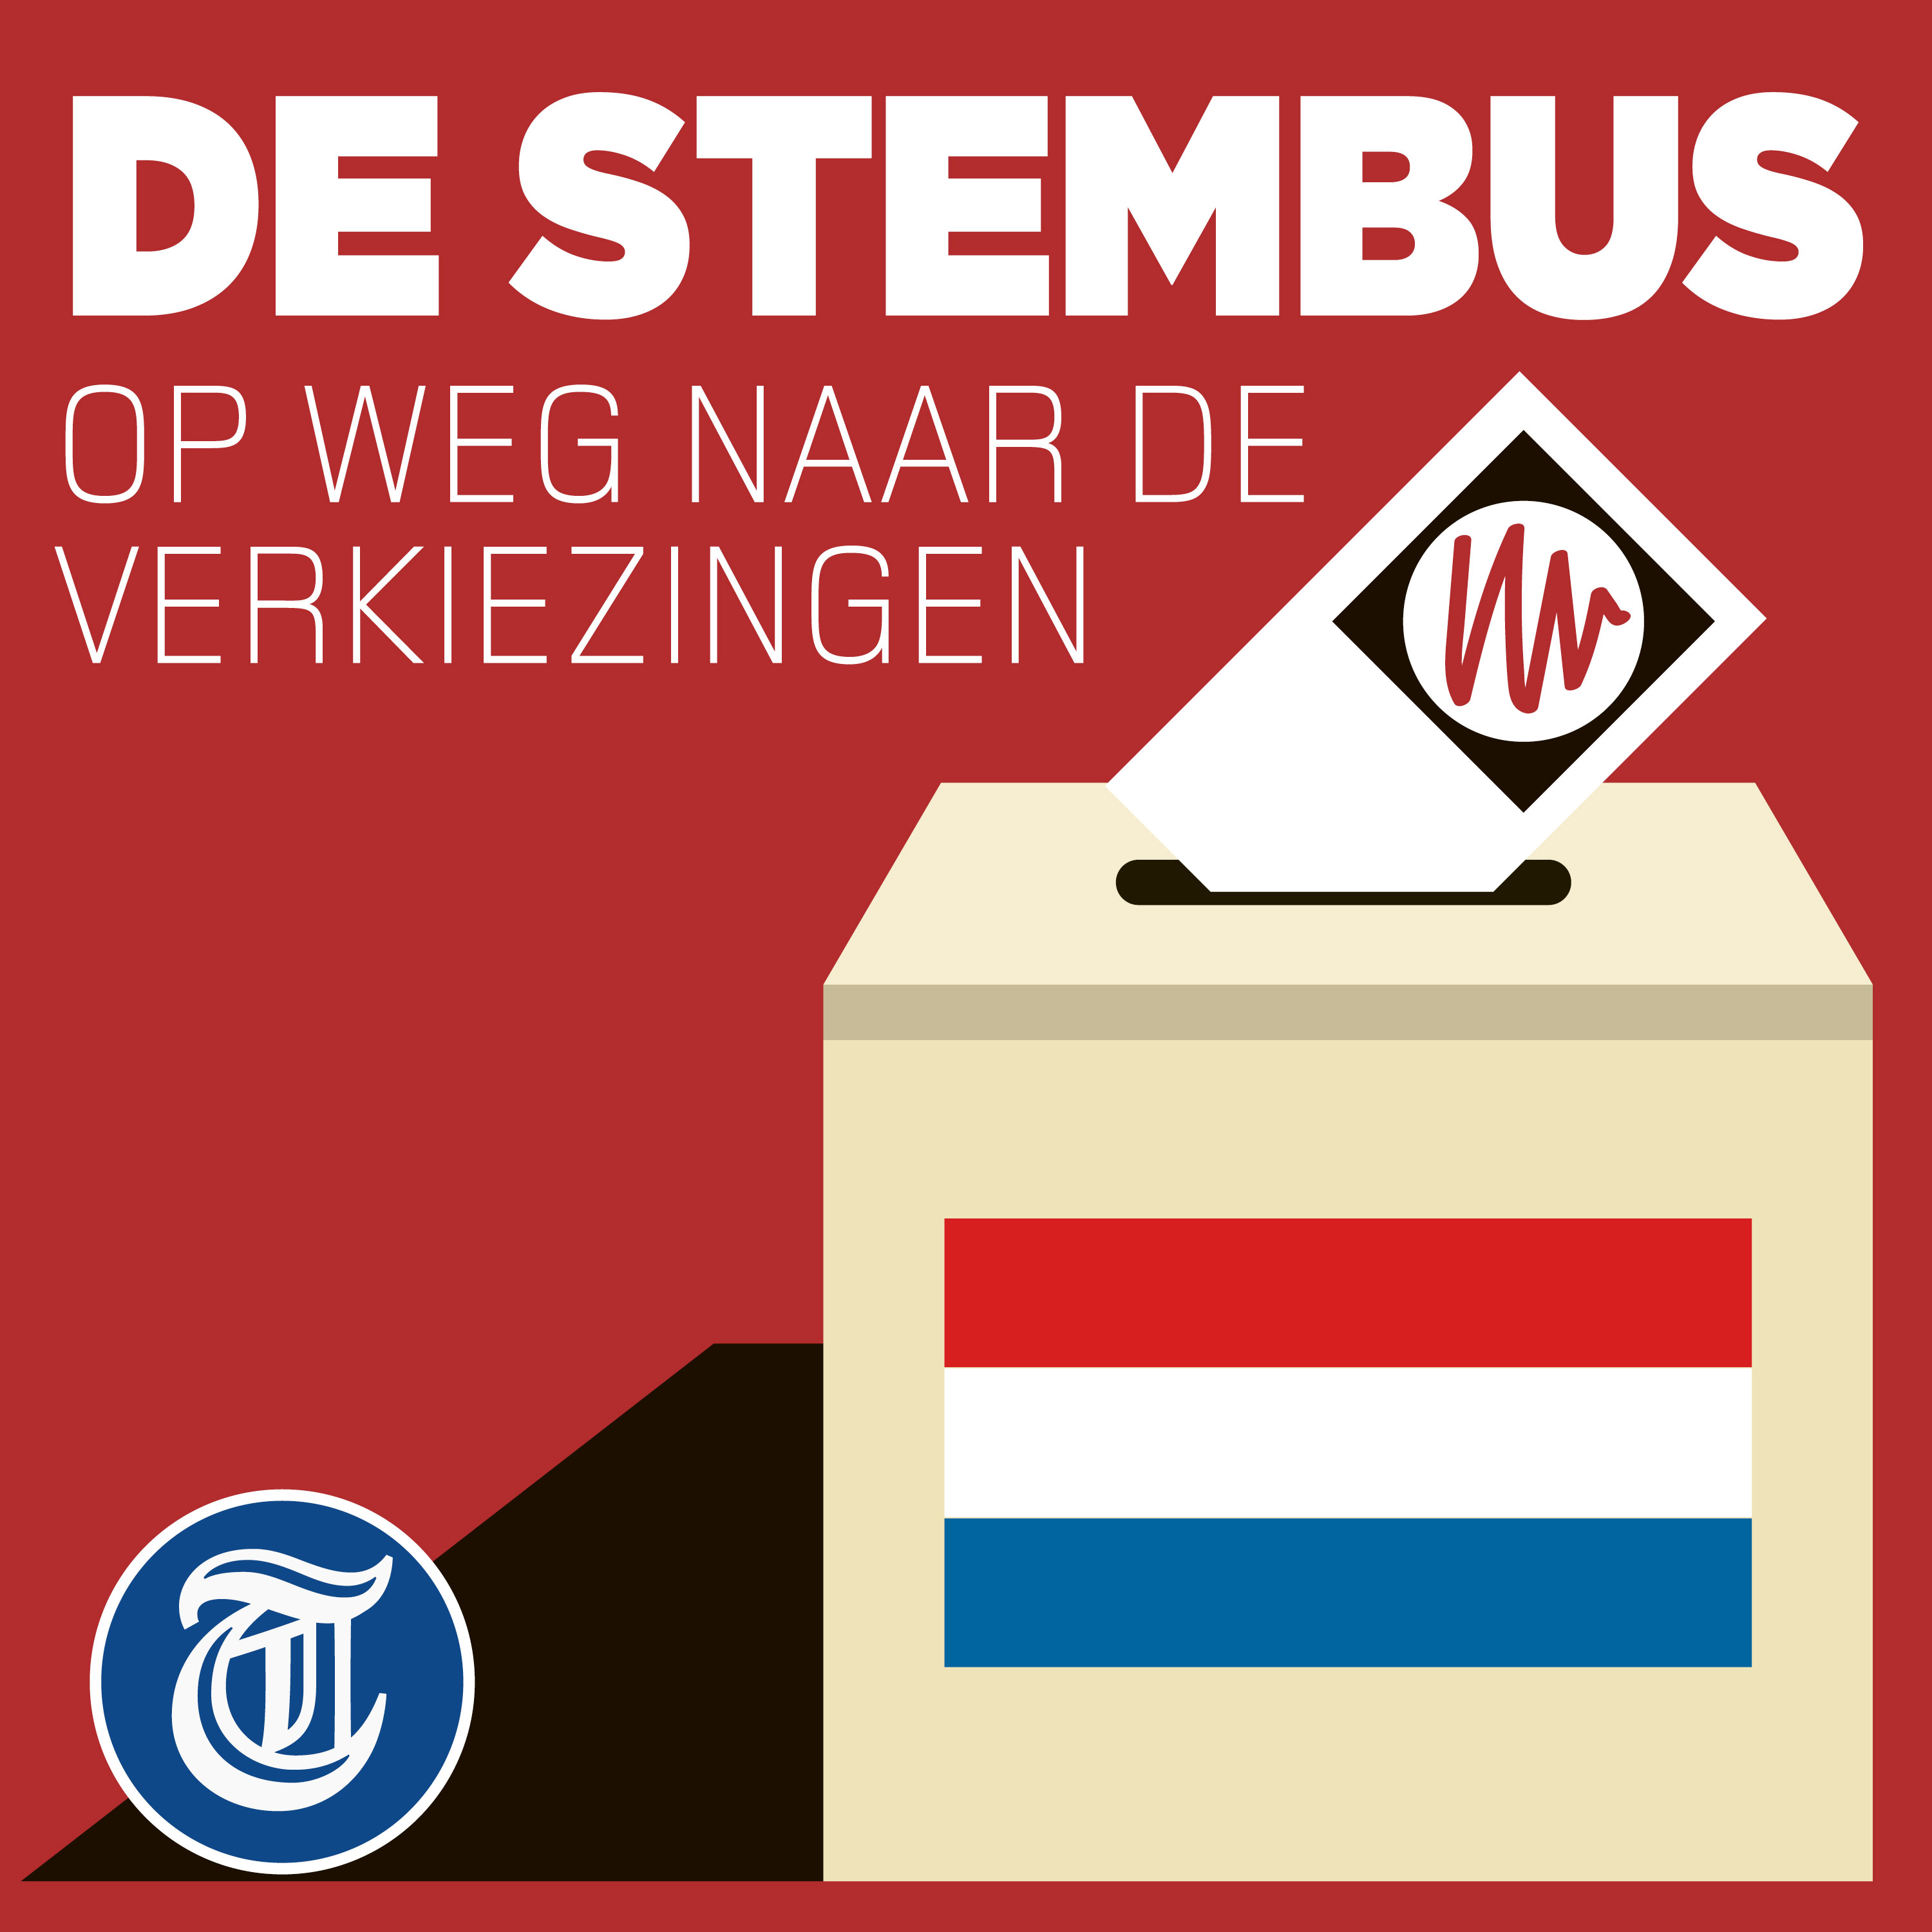 ‘Binnenskamers haalt D66 opgelucht adem’